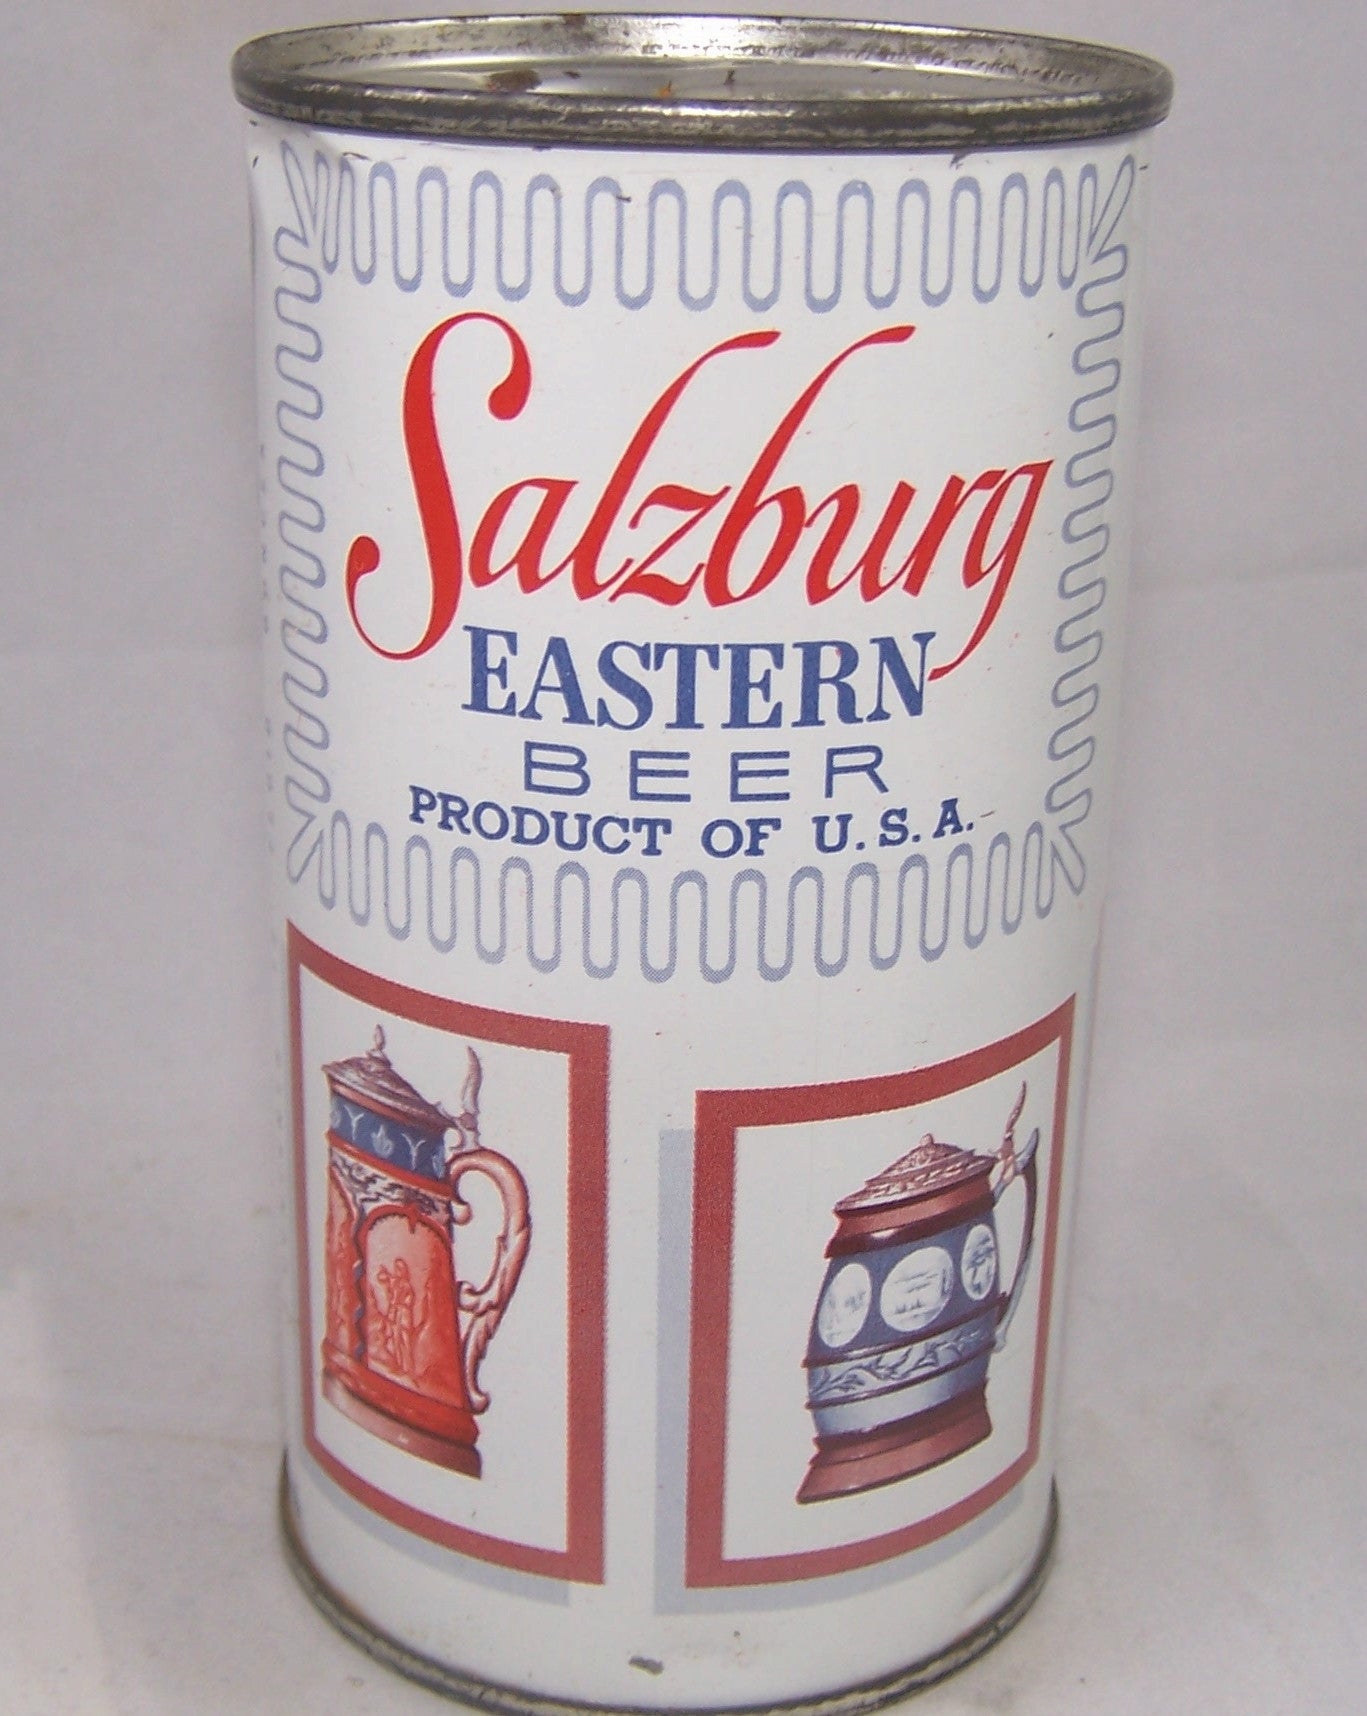 Salzburg Eastern Beer, USBC 127-09, Grade 1/1+ Sold on 10/02/16